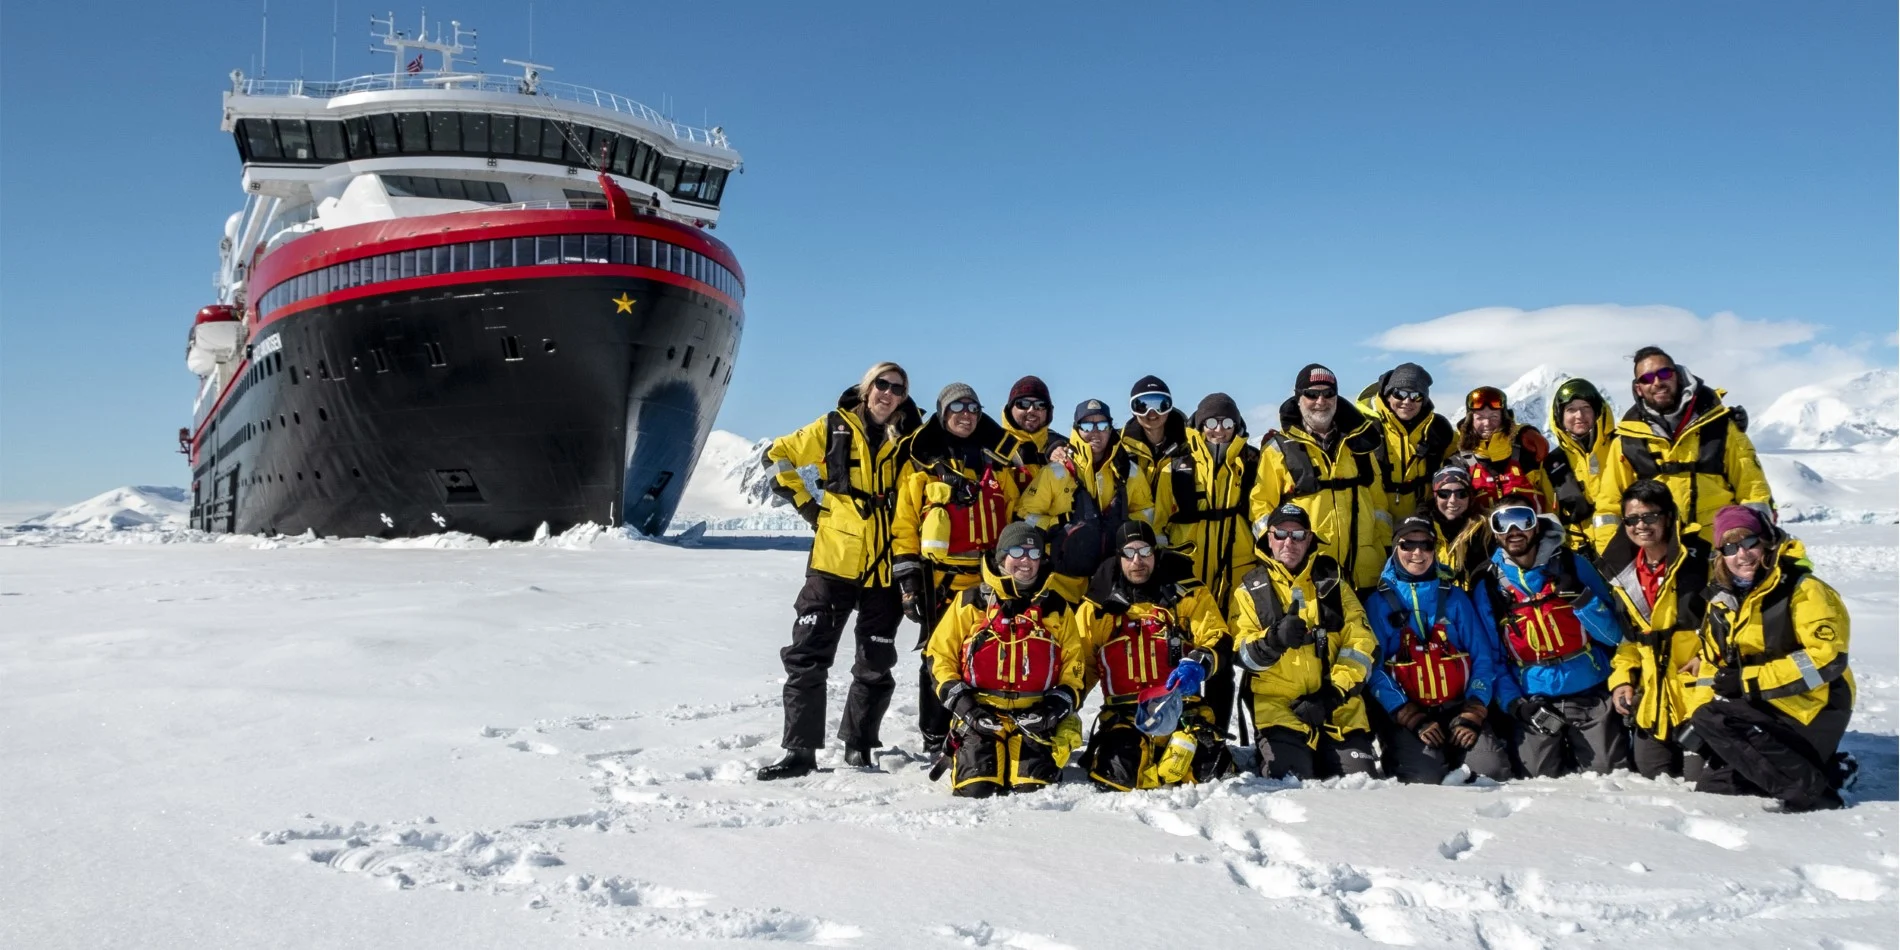 Expedition Team in Antarctica with MS Roald Amundsen